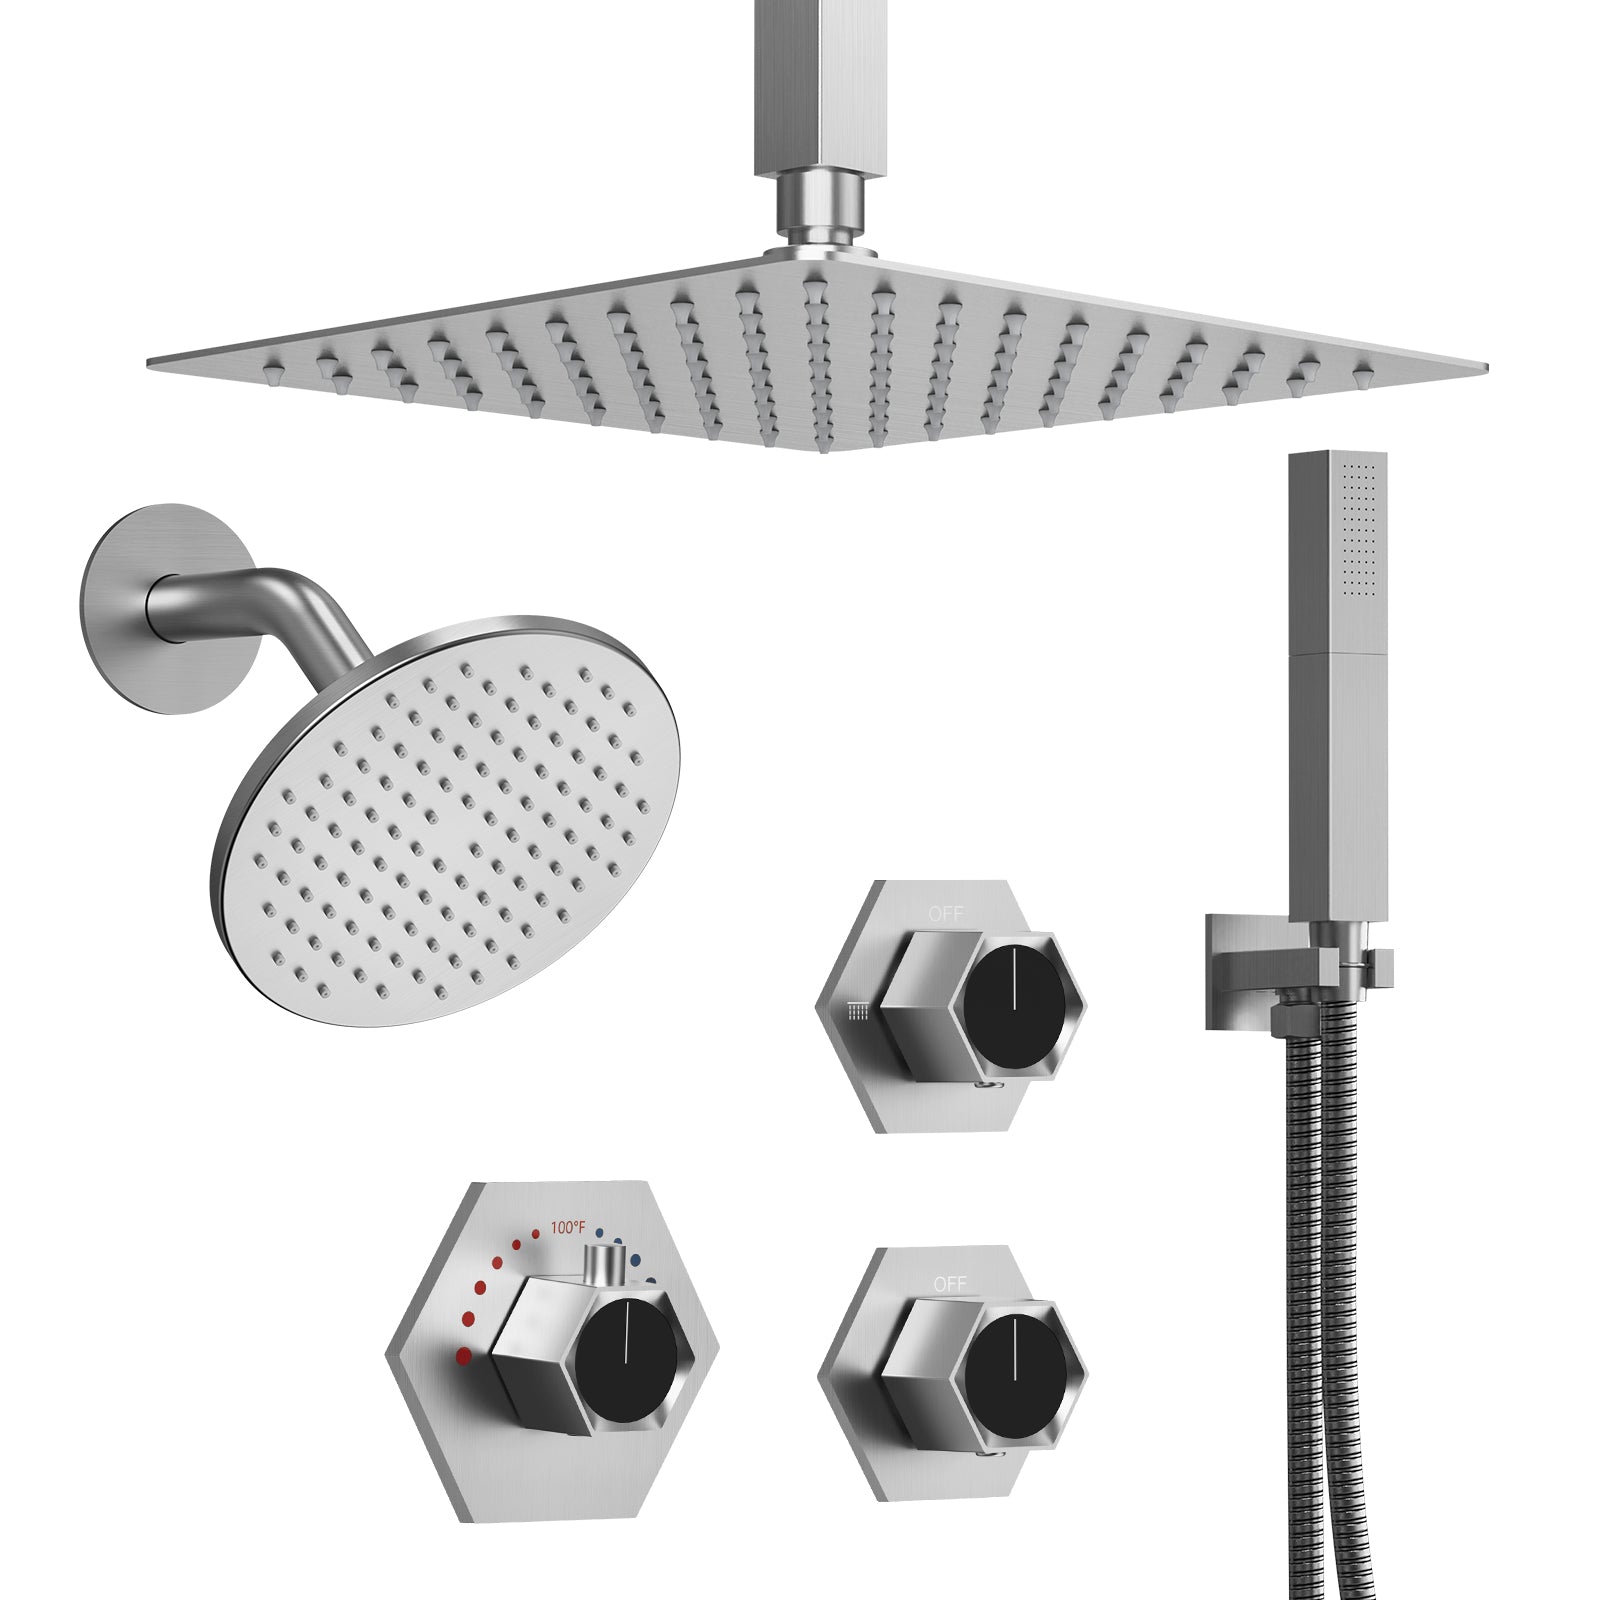 EVERSTEIN Luxury Dual Shower Heads: Brushed Nickel 12" Ceiling Mounted Rain Showerhead Handheld Spray Bathroom Shower System